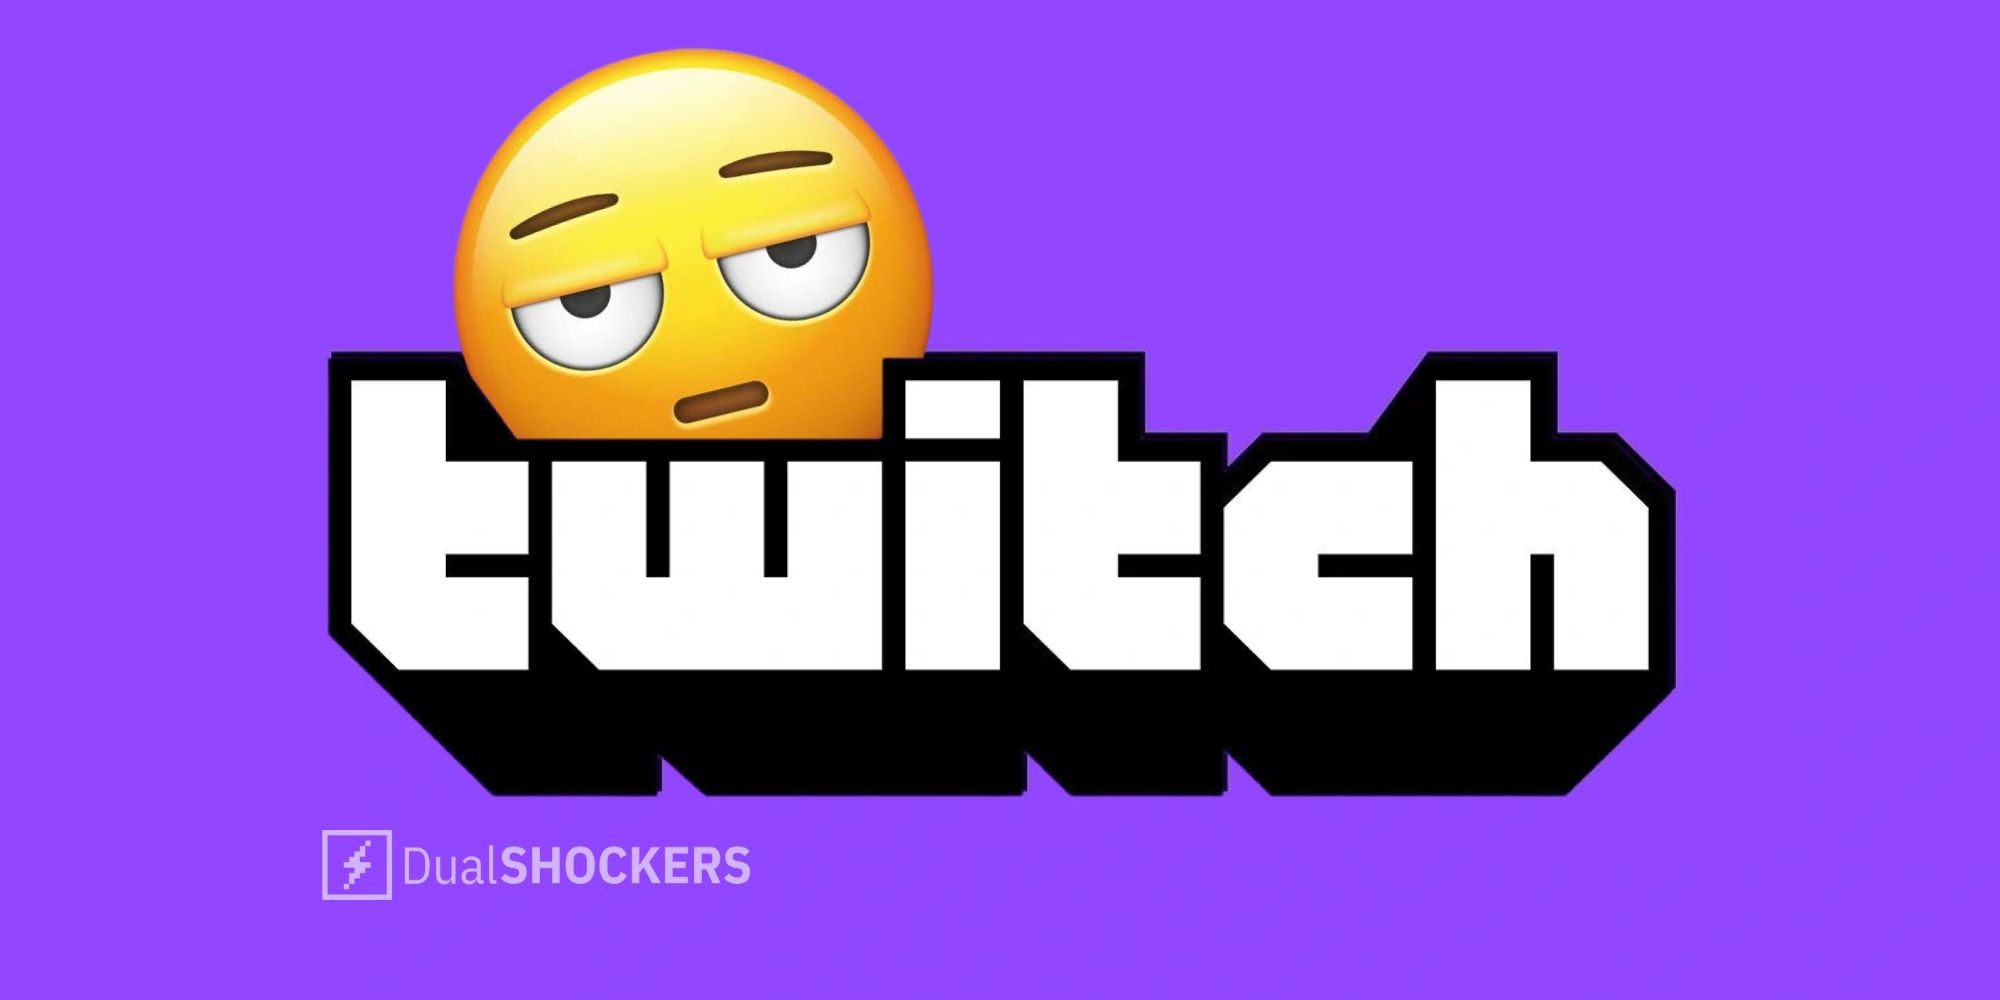 Twitch logo with dawning meh face emoji